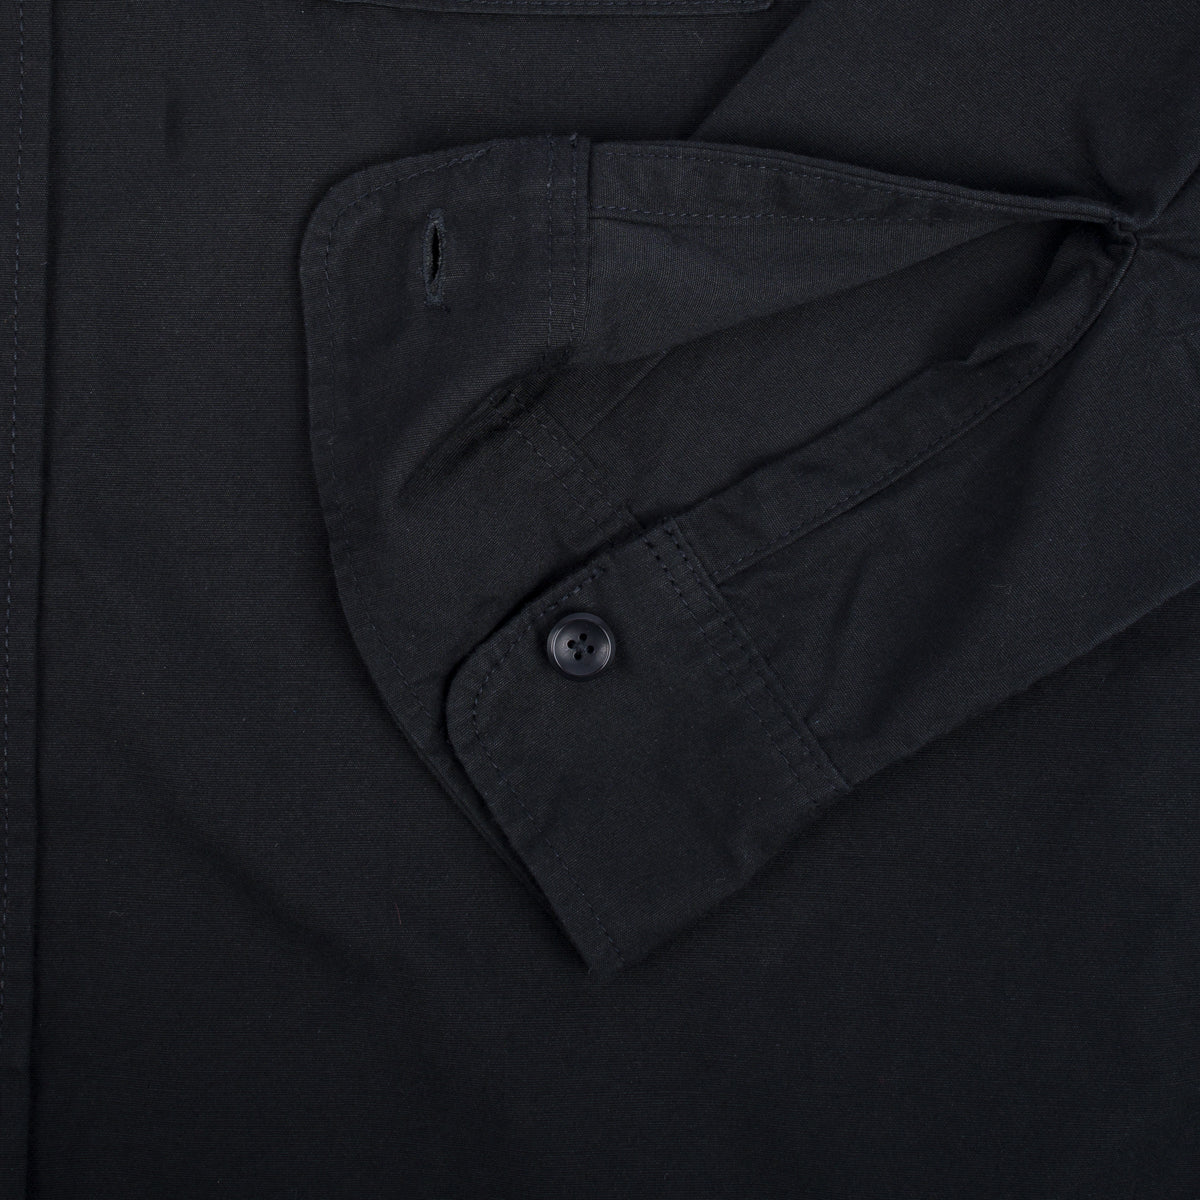 IHSH-395-BLK - 7oz Fatigue Cloth Work Shirt - Black